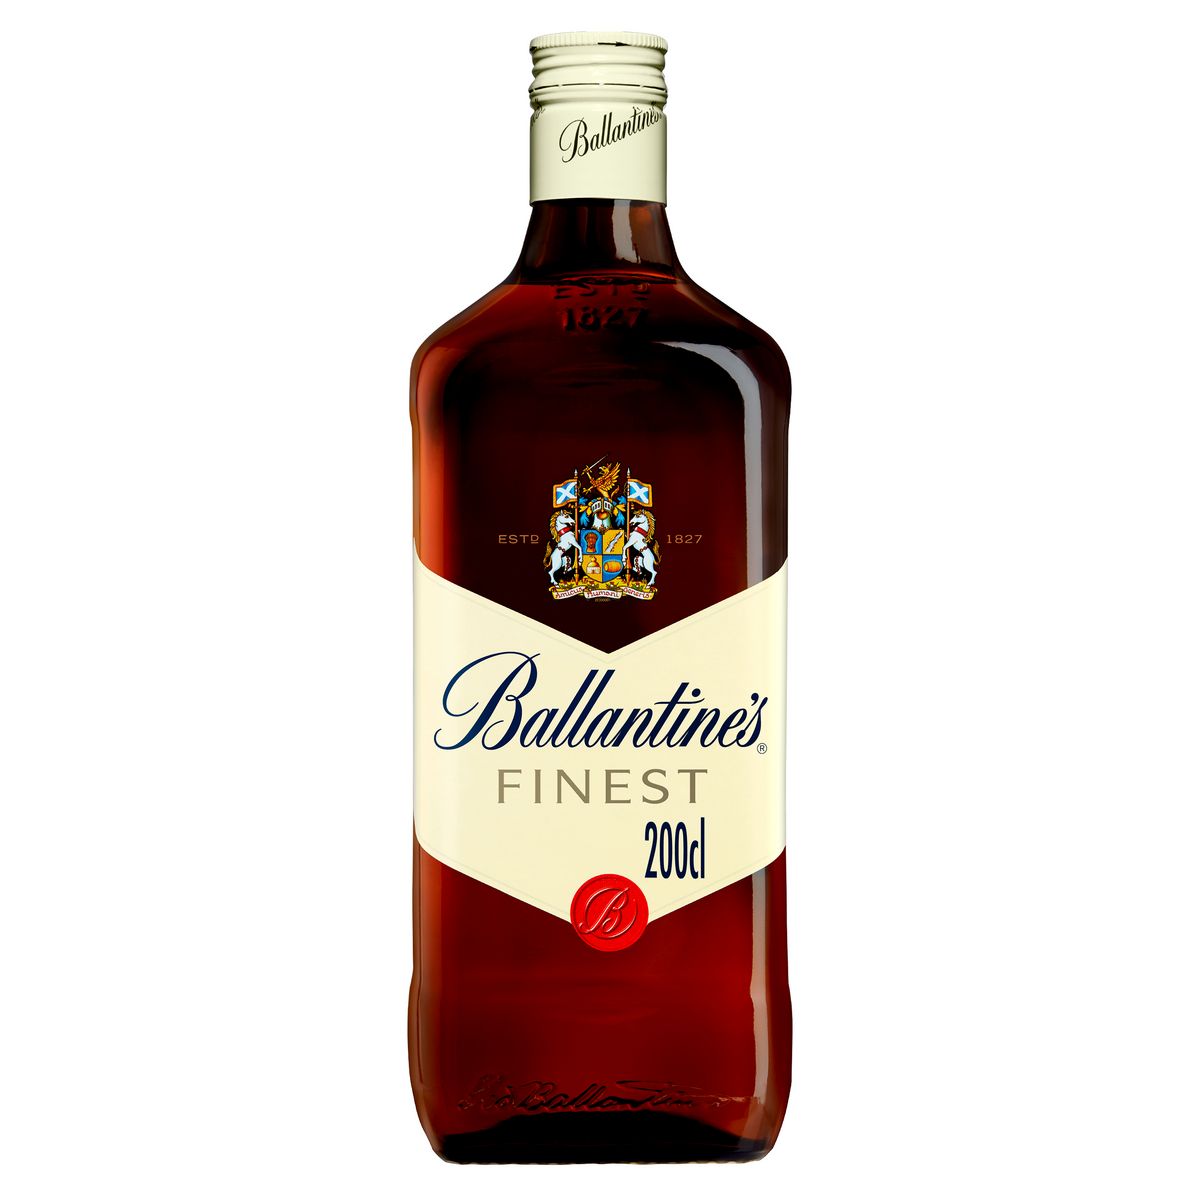 BALLANTINES Scotch whisky écossais blended malt 40% 2l